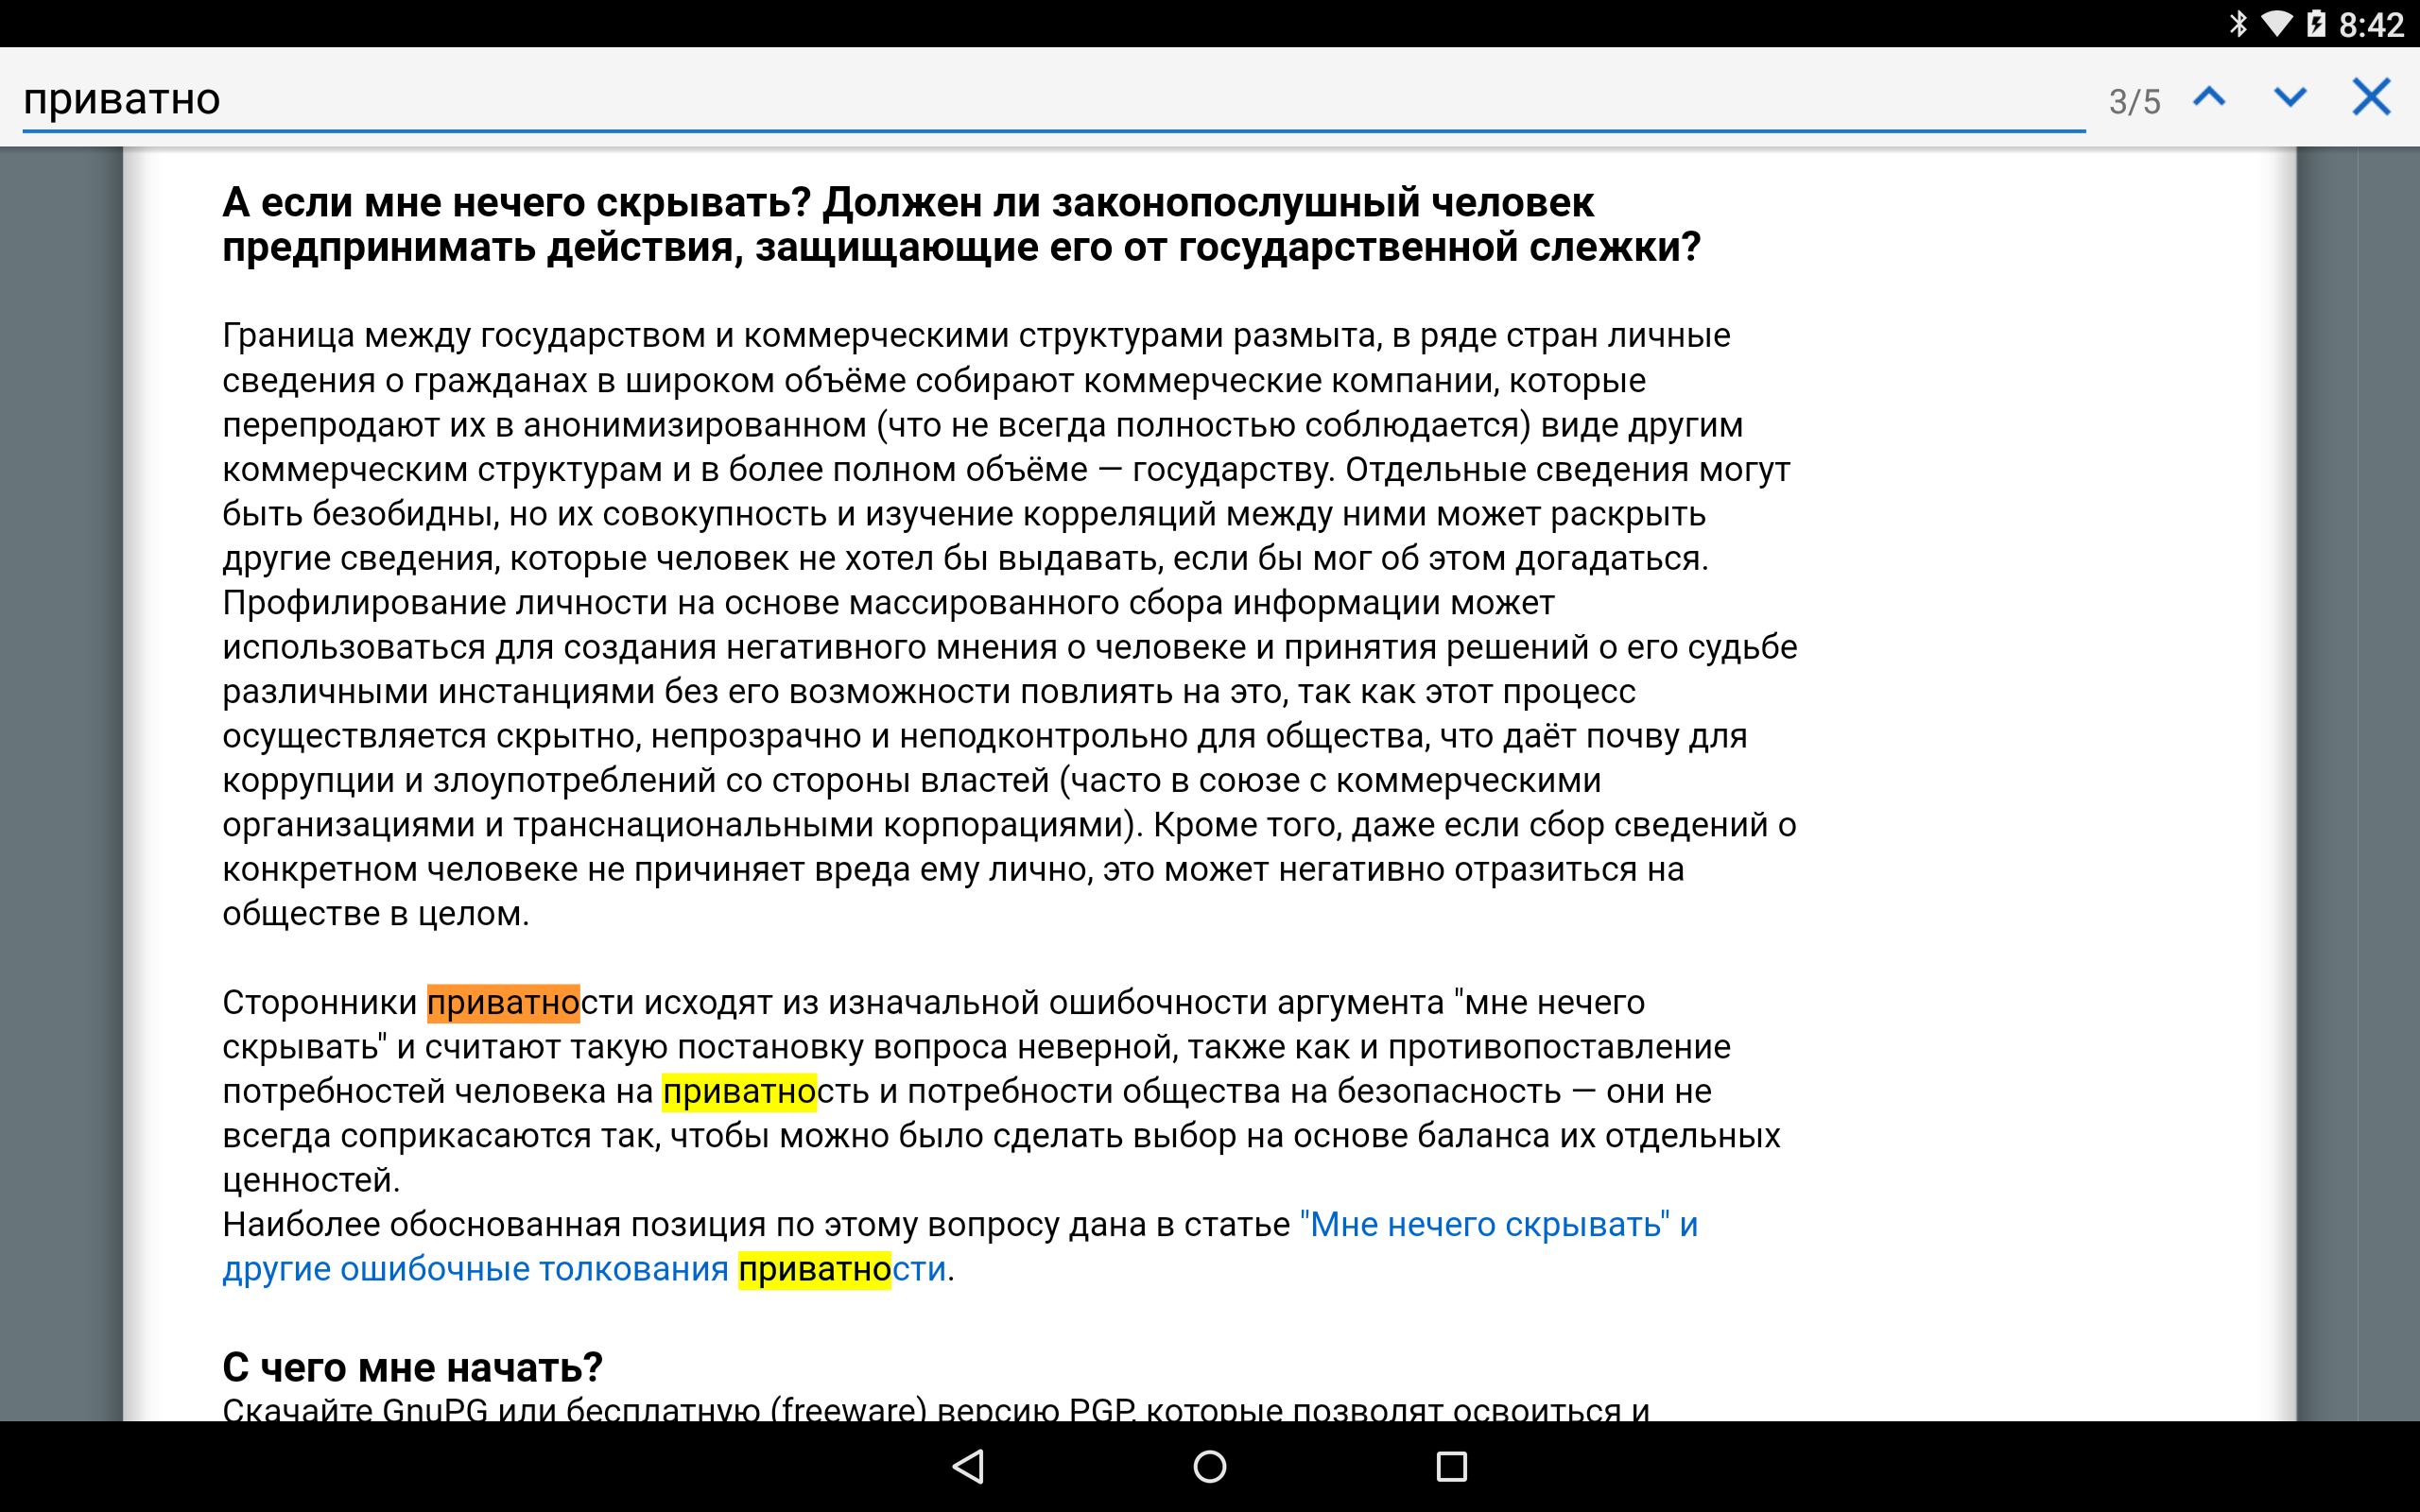 fastlane/metadata/android/ru-RU/images/tenInchScreenshots/02-FindonPage.png